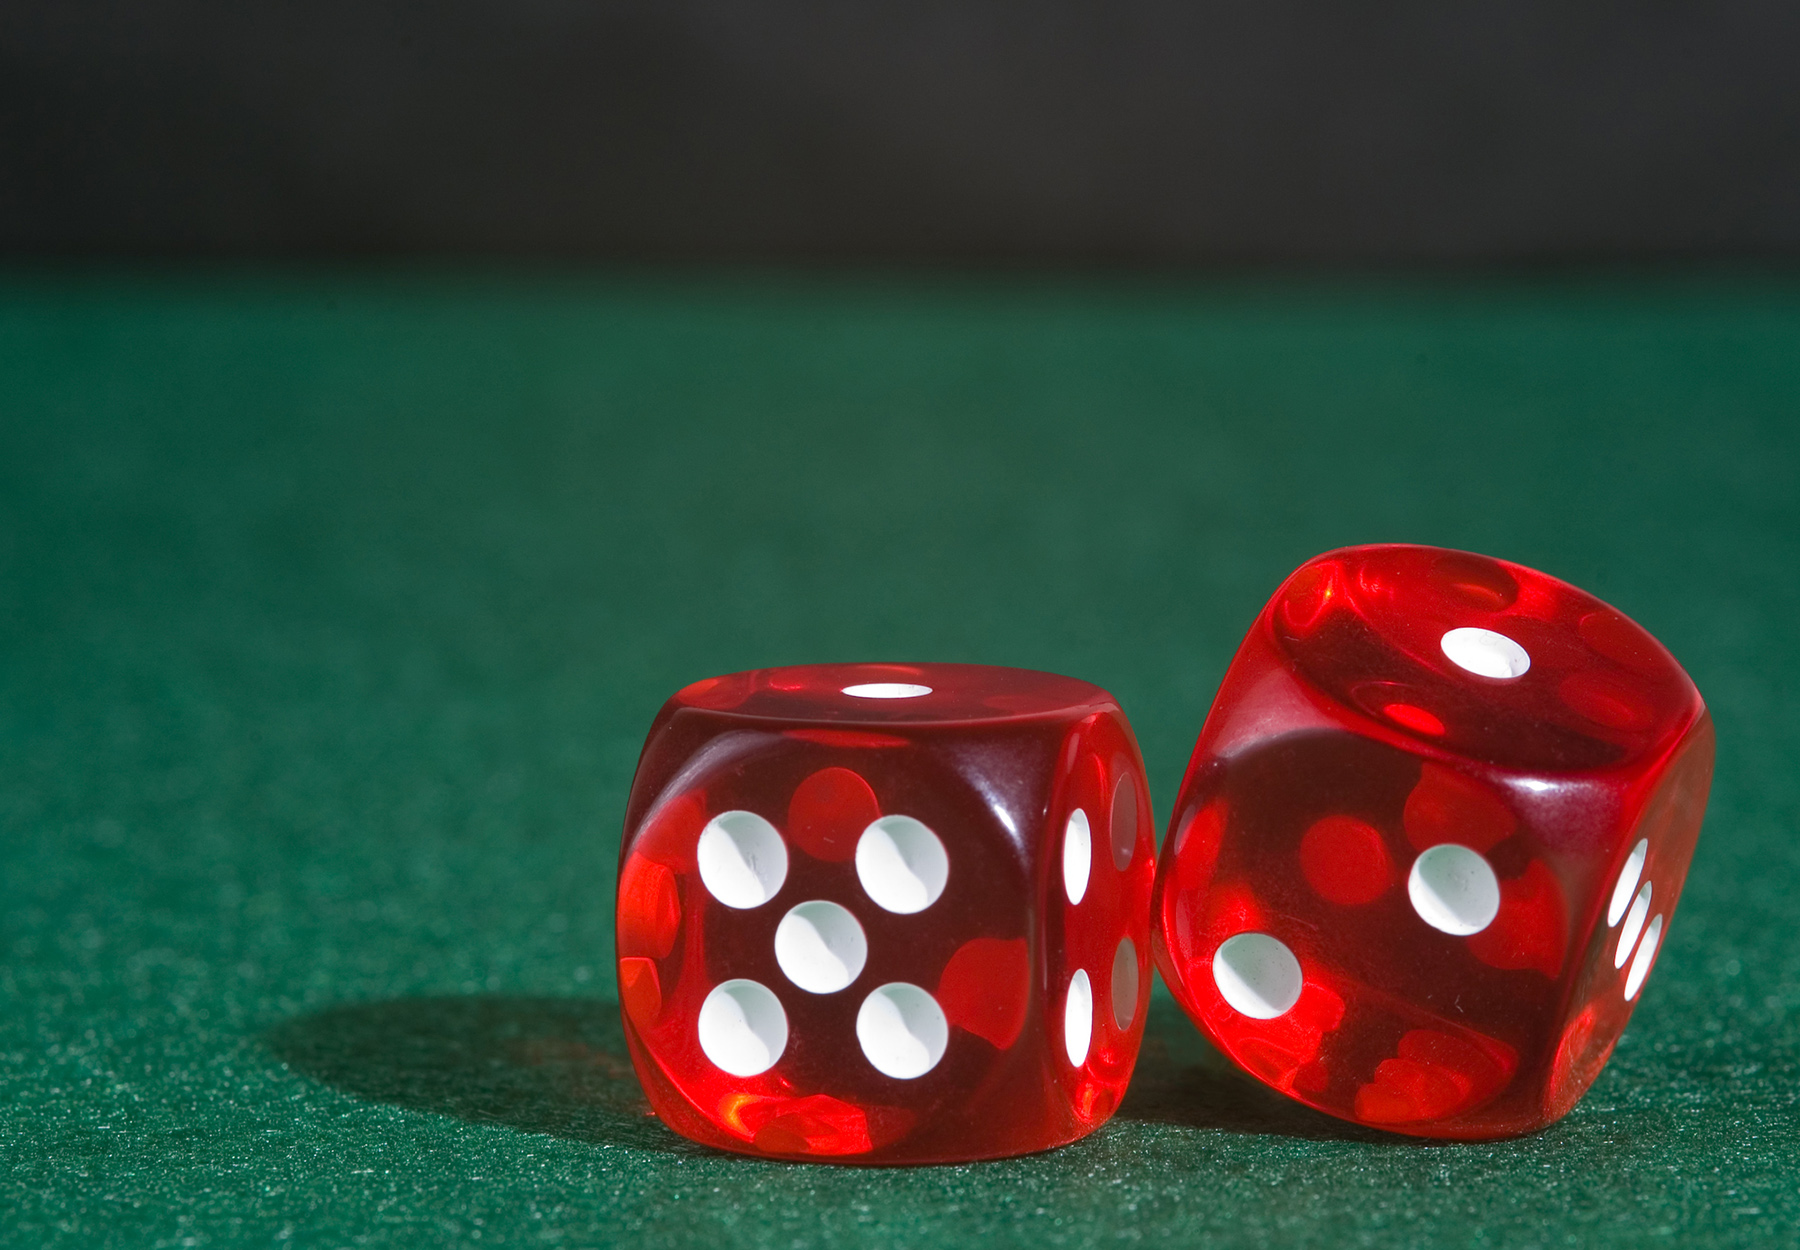 Red Las Vegas Casino-style dice on green felt, showing snake eyes. Stock photo.